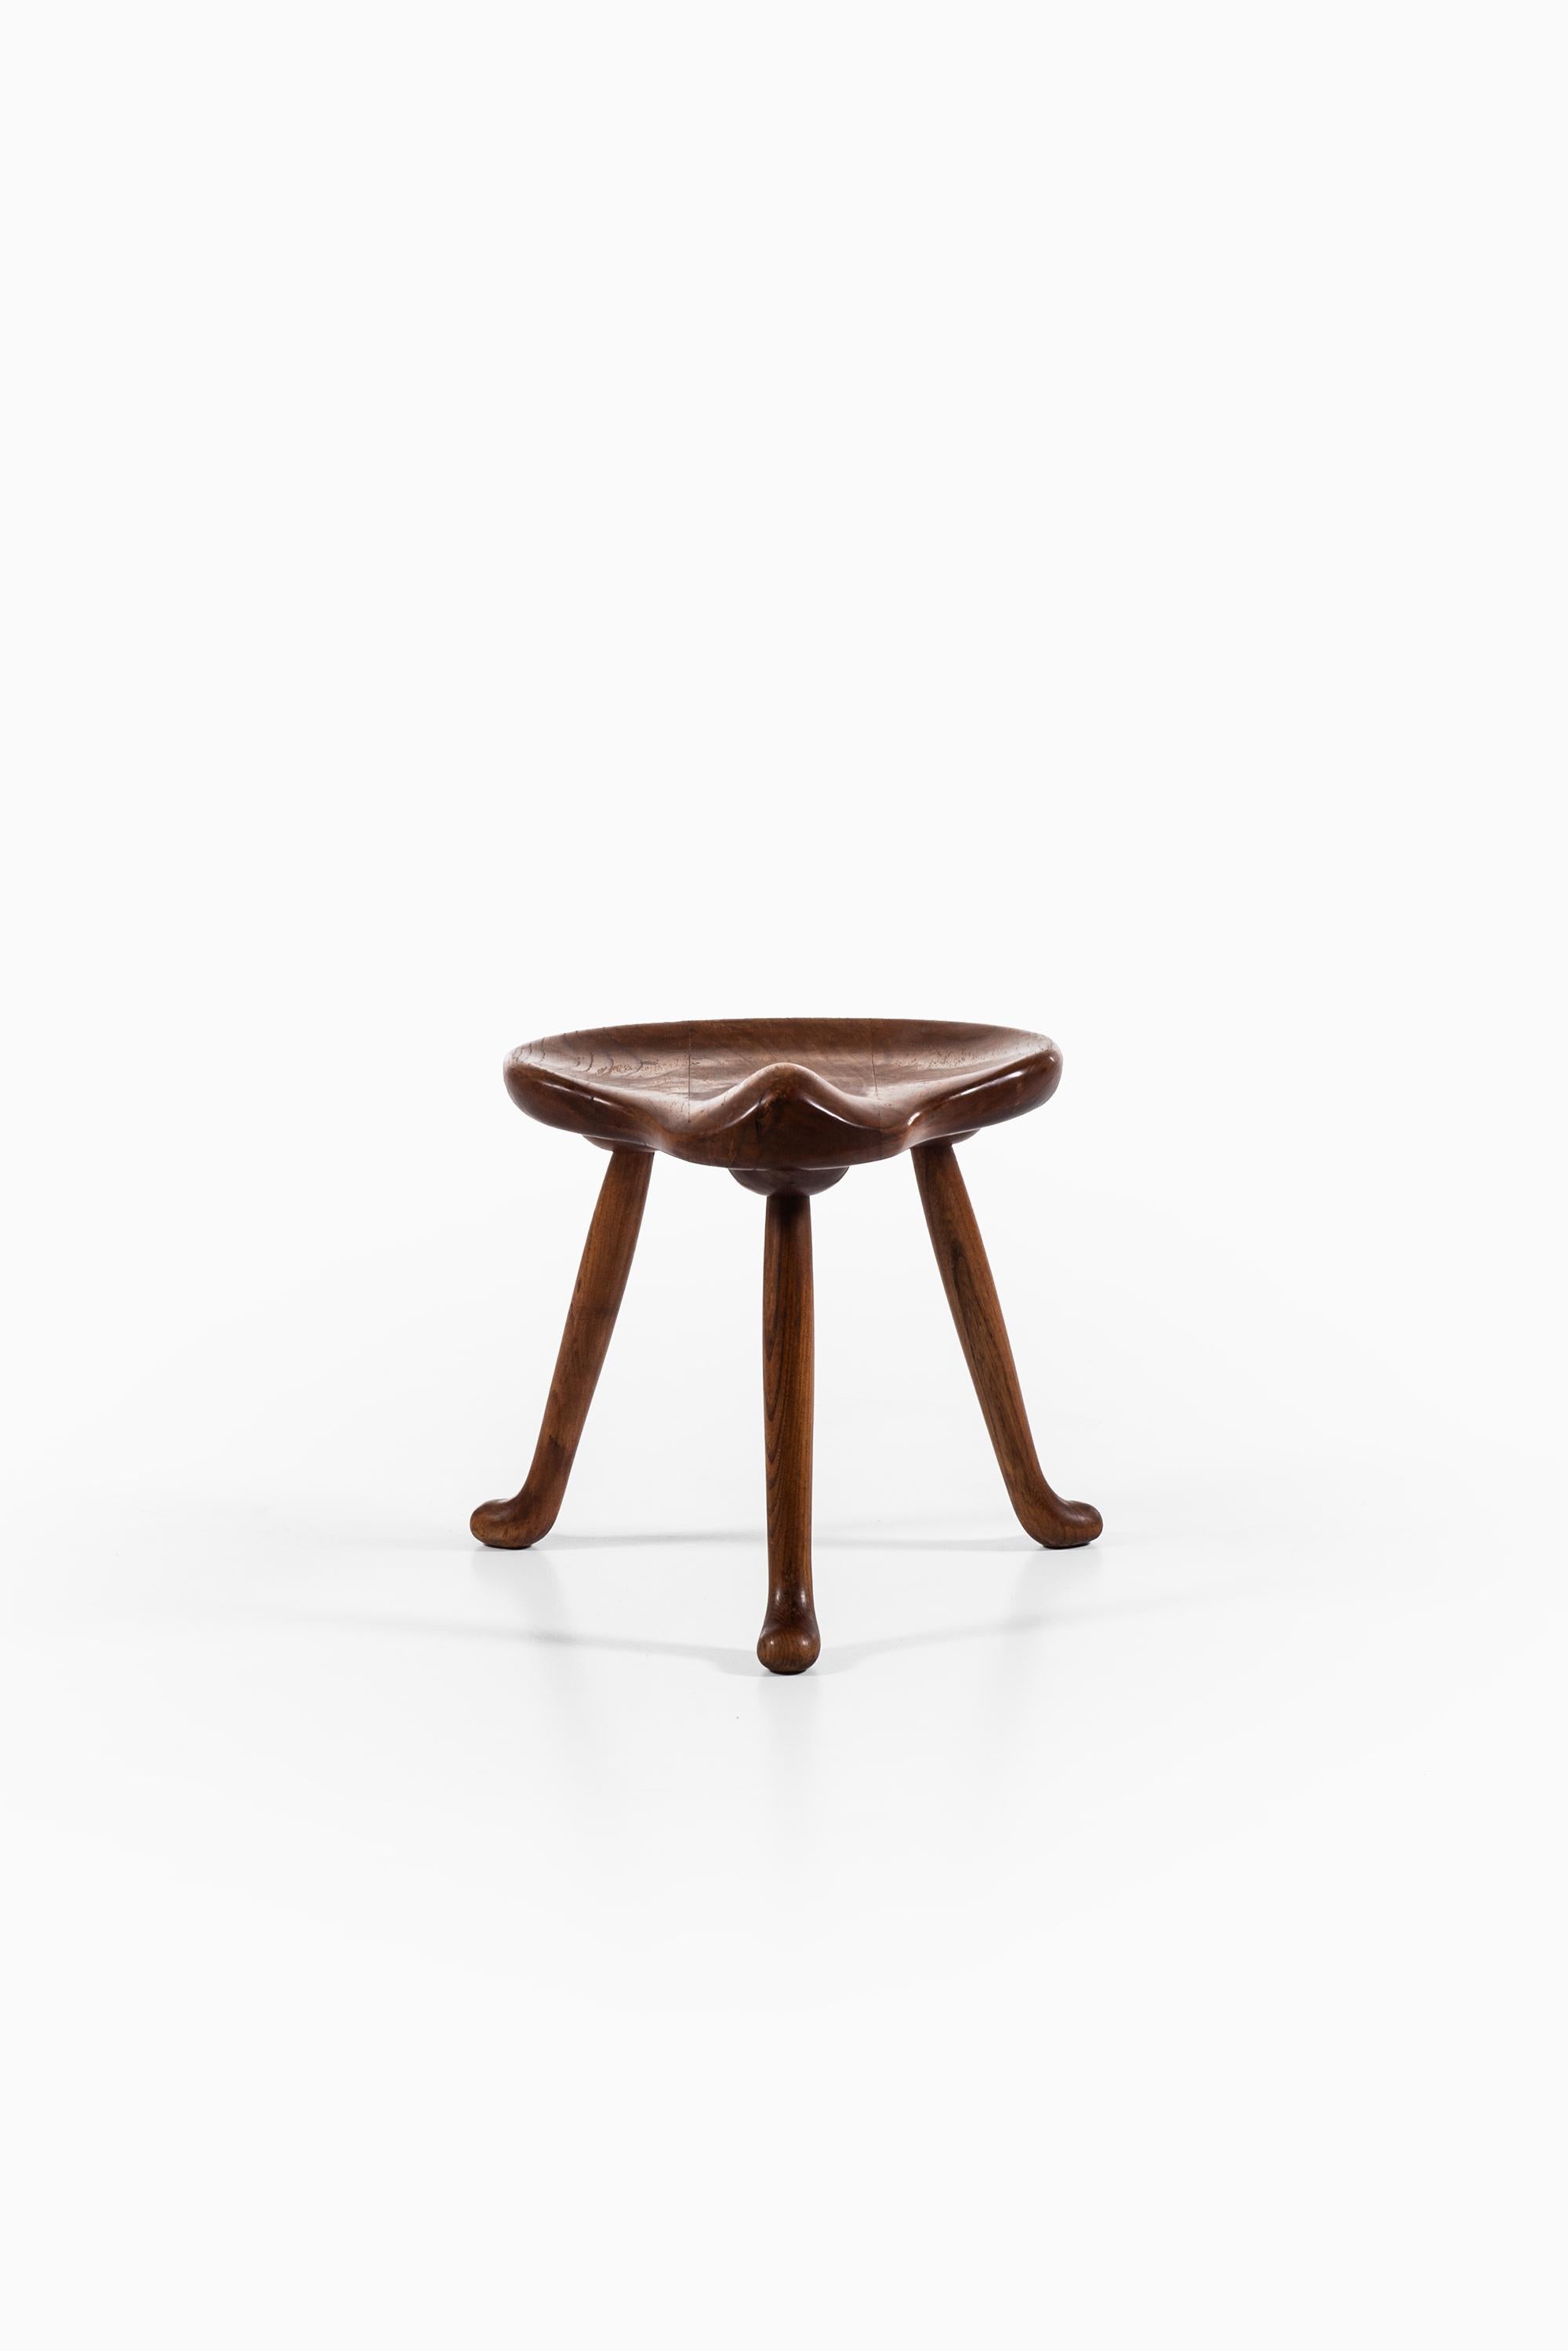 Very rare stool designed by Josef Frank. Produced by Svenskt Tenn in Sweden.